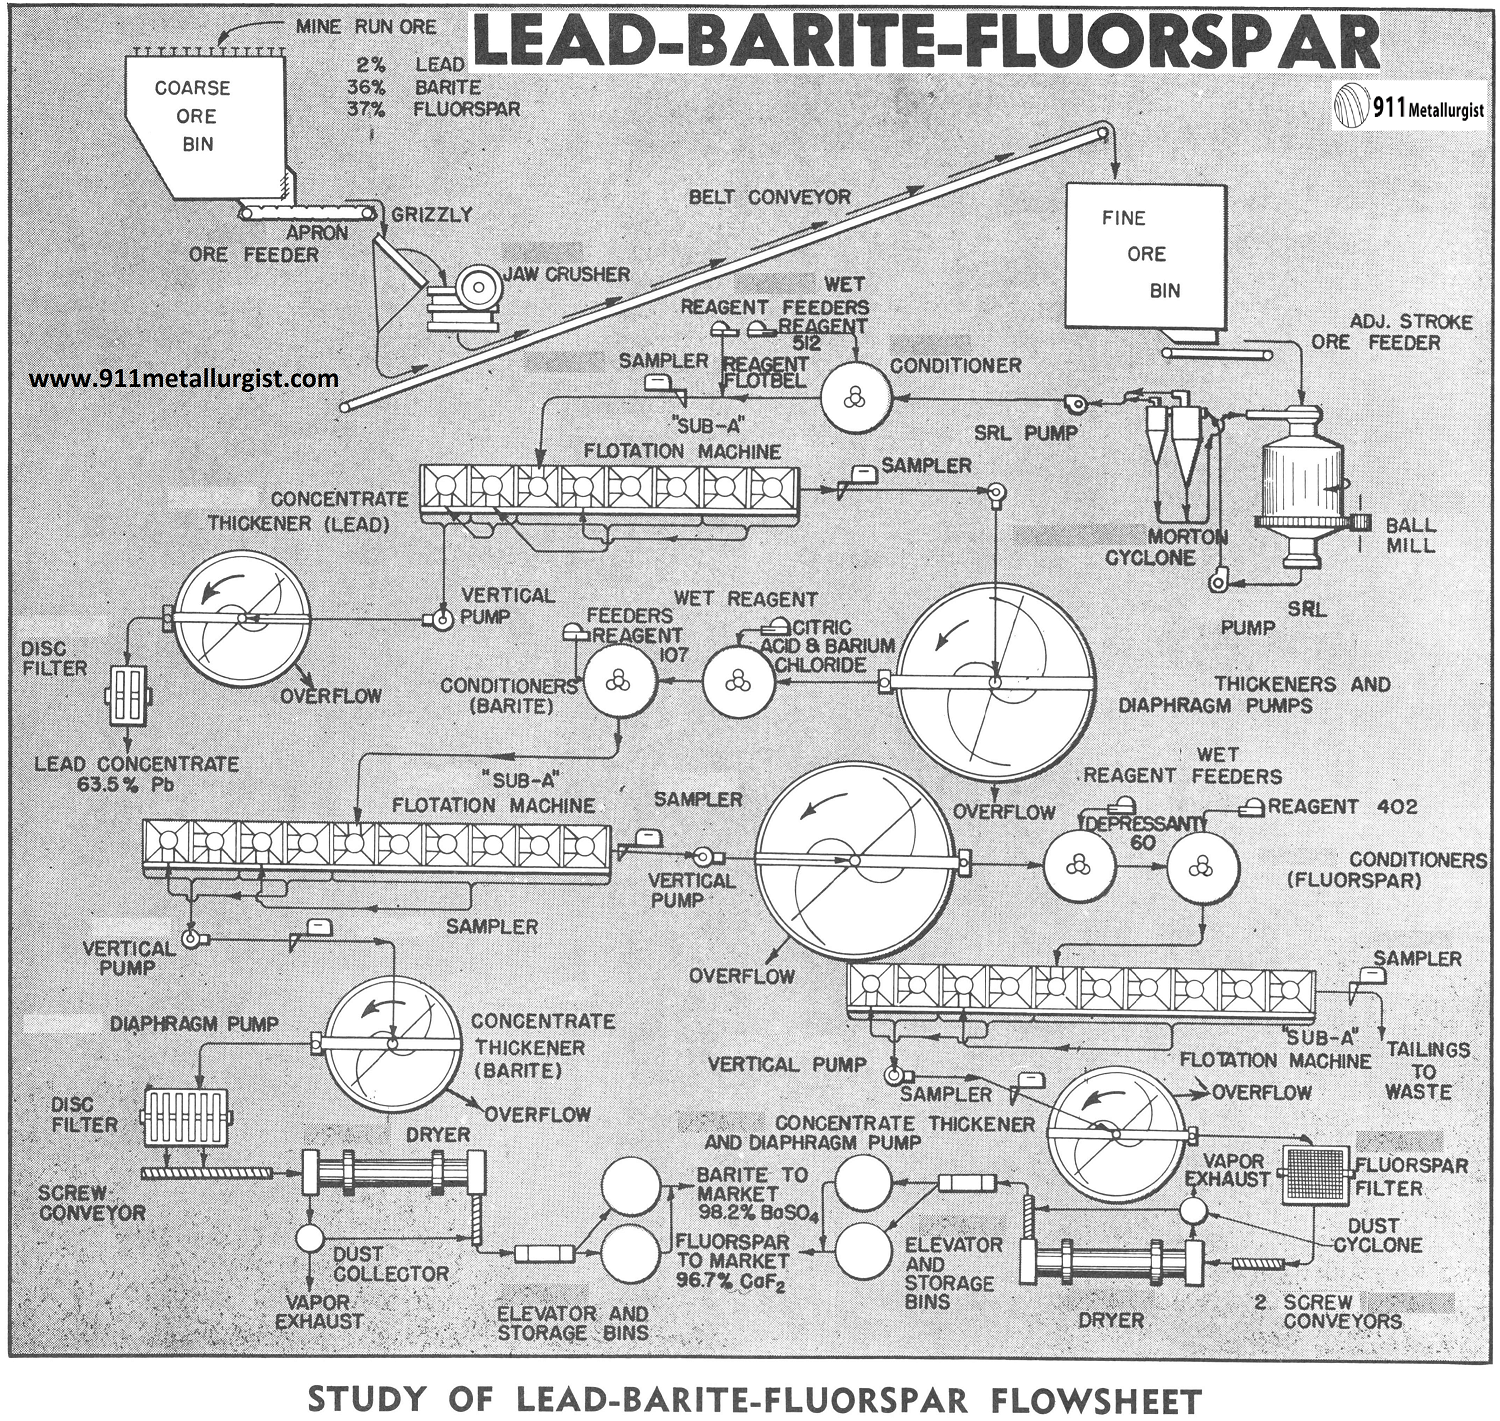 Study of Lead-Barite-Fluorspar Flowsheet